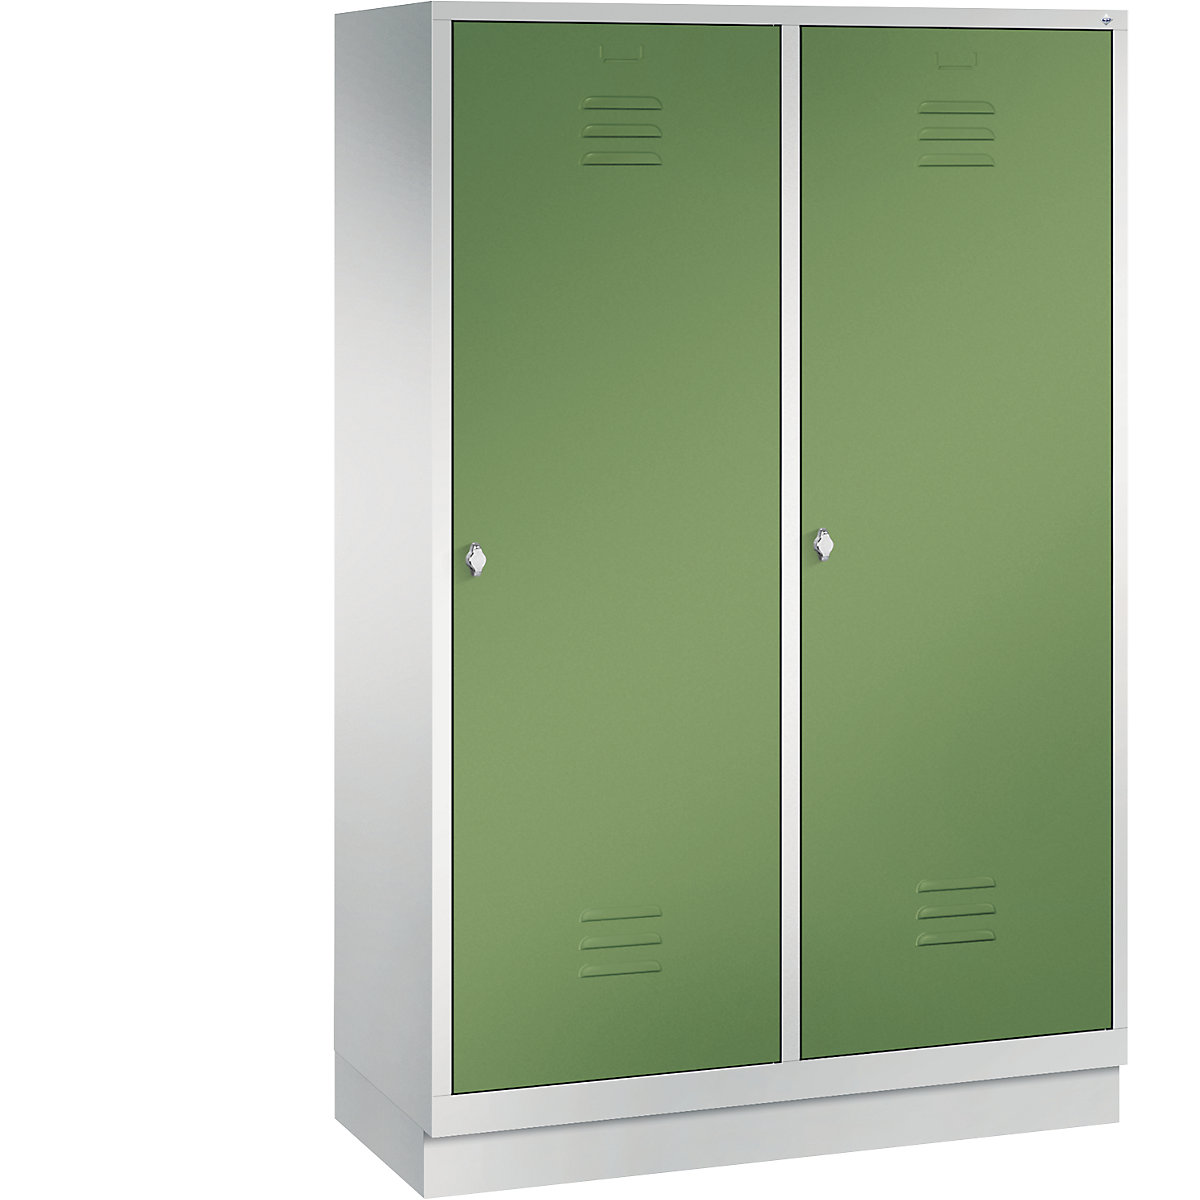 CLASSIC cloakroom locker with plinth, door for 2 compartments – C+P, 4 compartments, compartment width 300 mm, light grey / reseda green-4